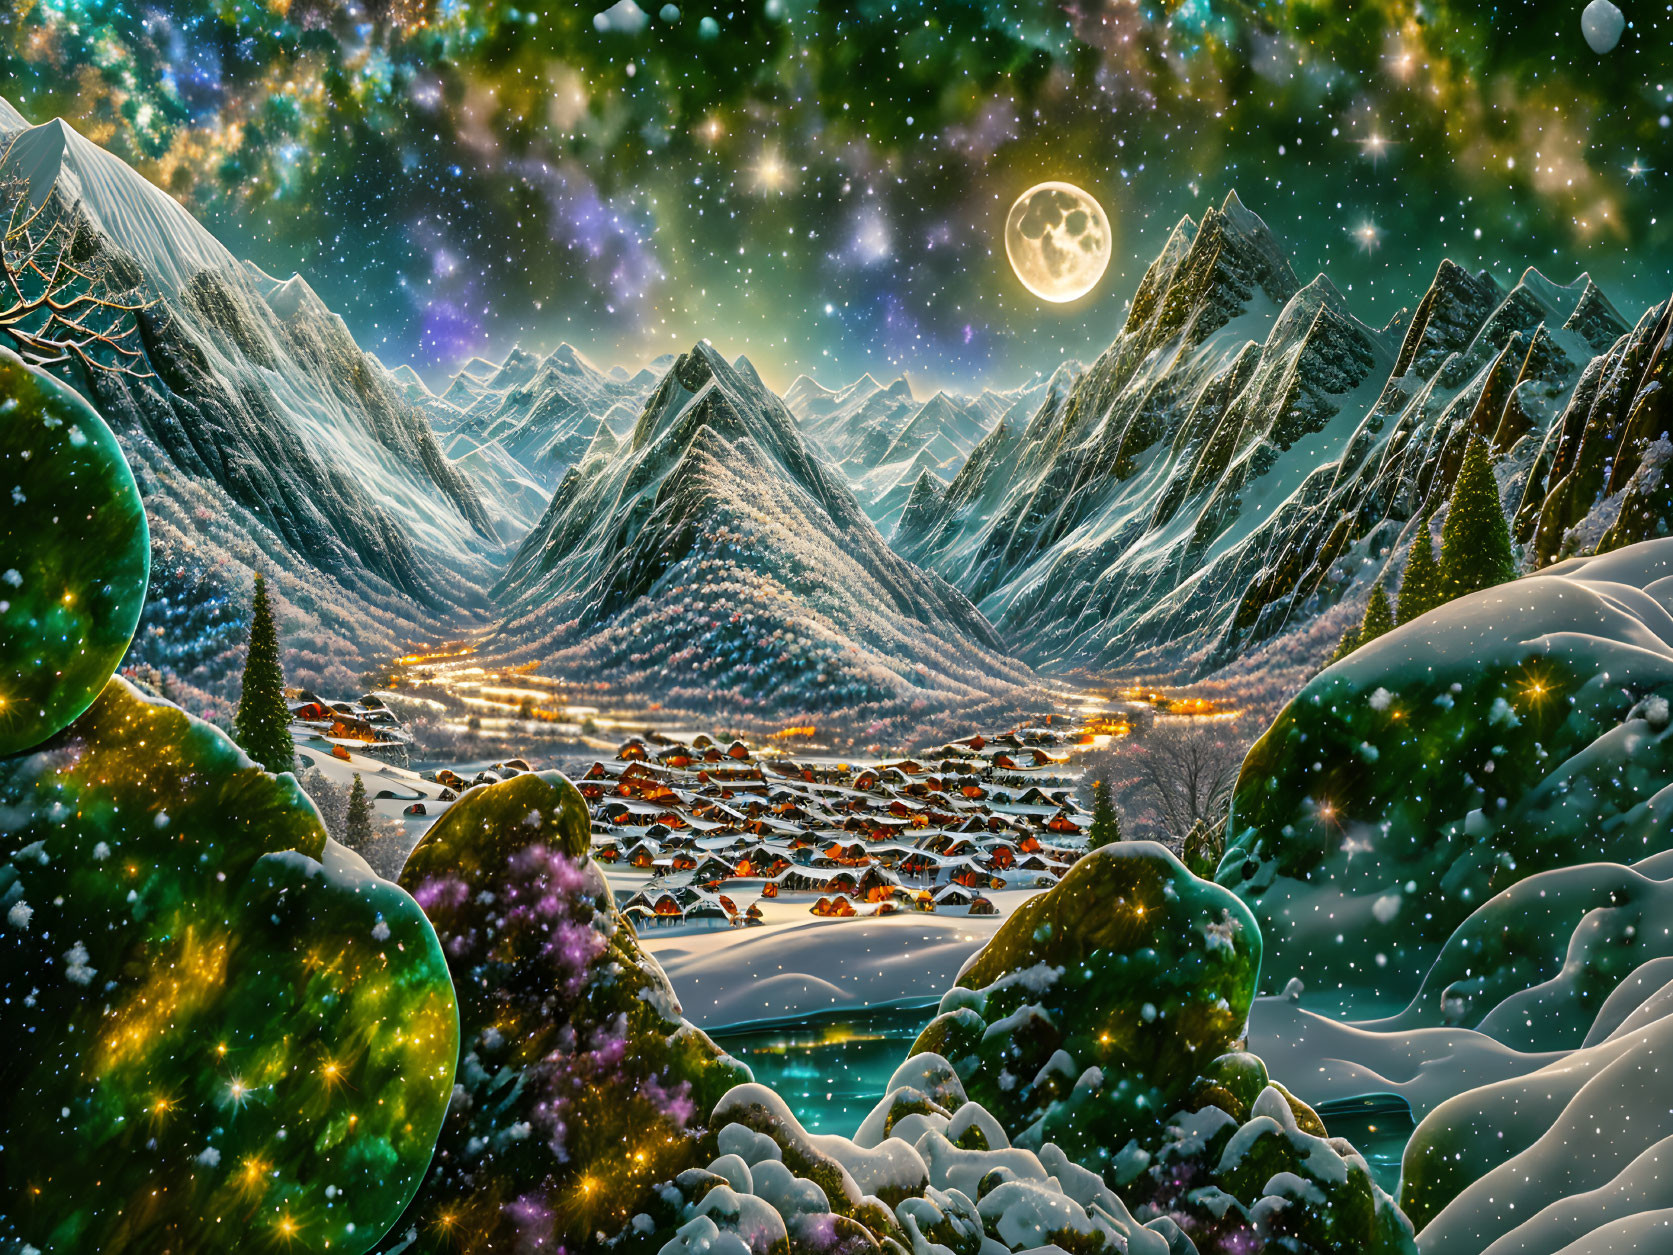 Fantasy landscape: snowy mountain village under starry sky